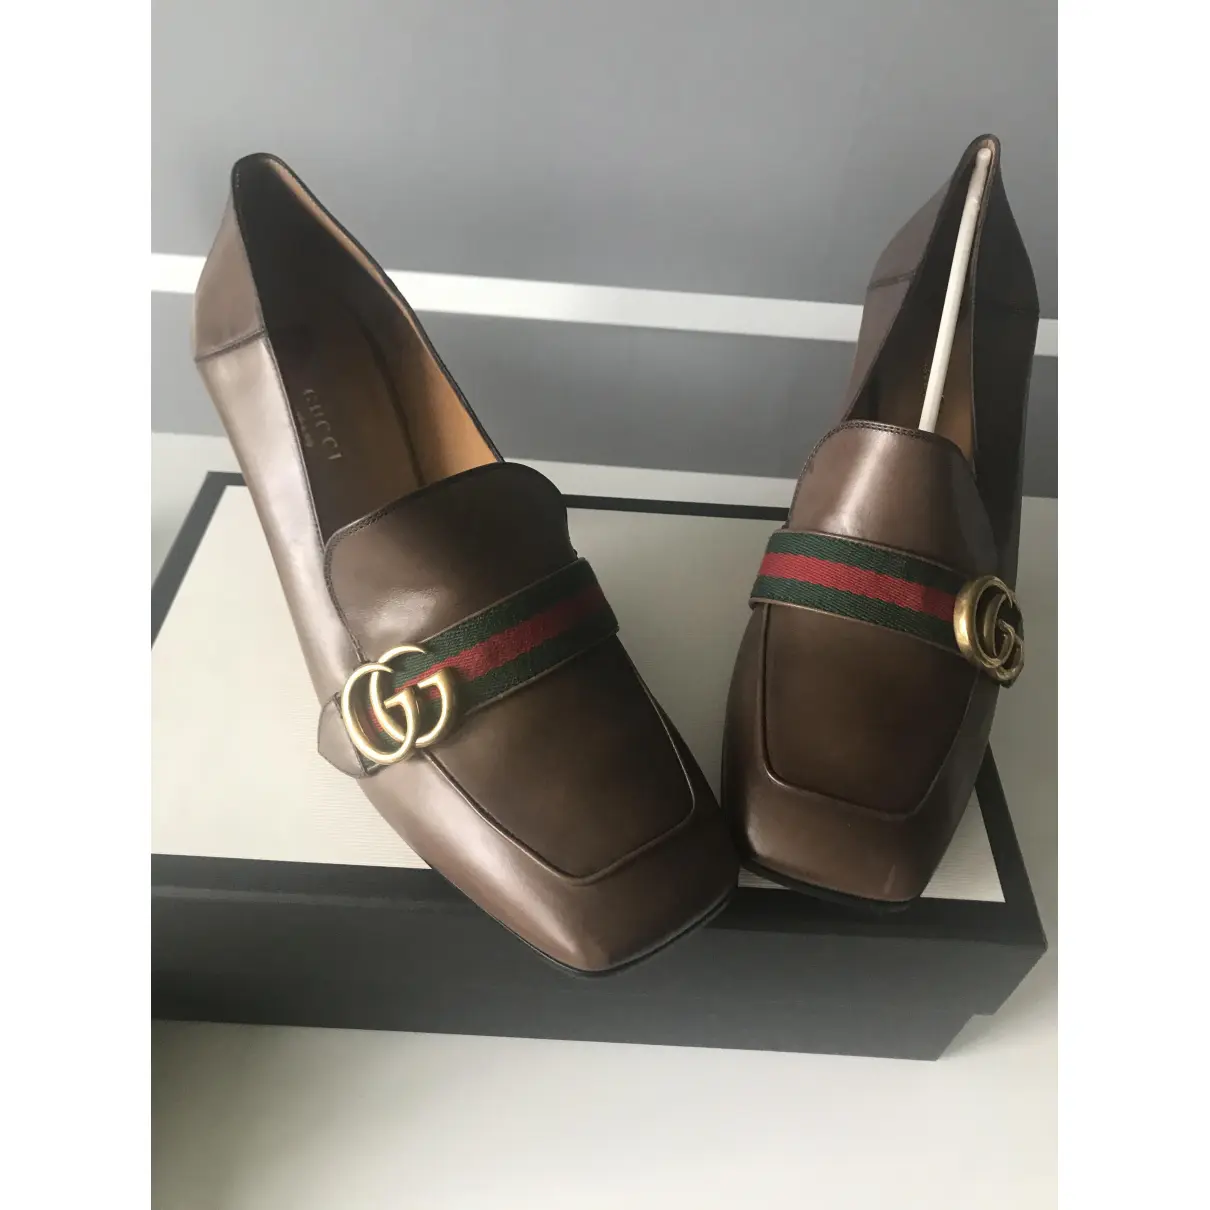 Buy Gucci Peyton leather heels online